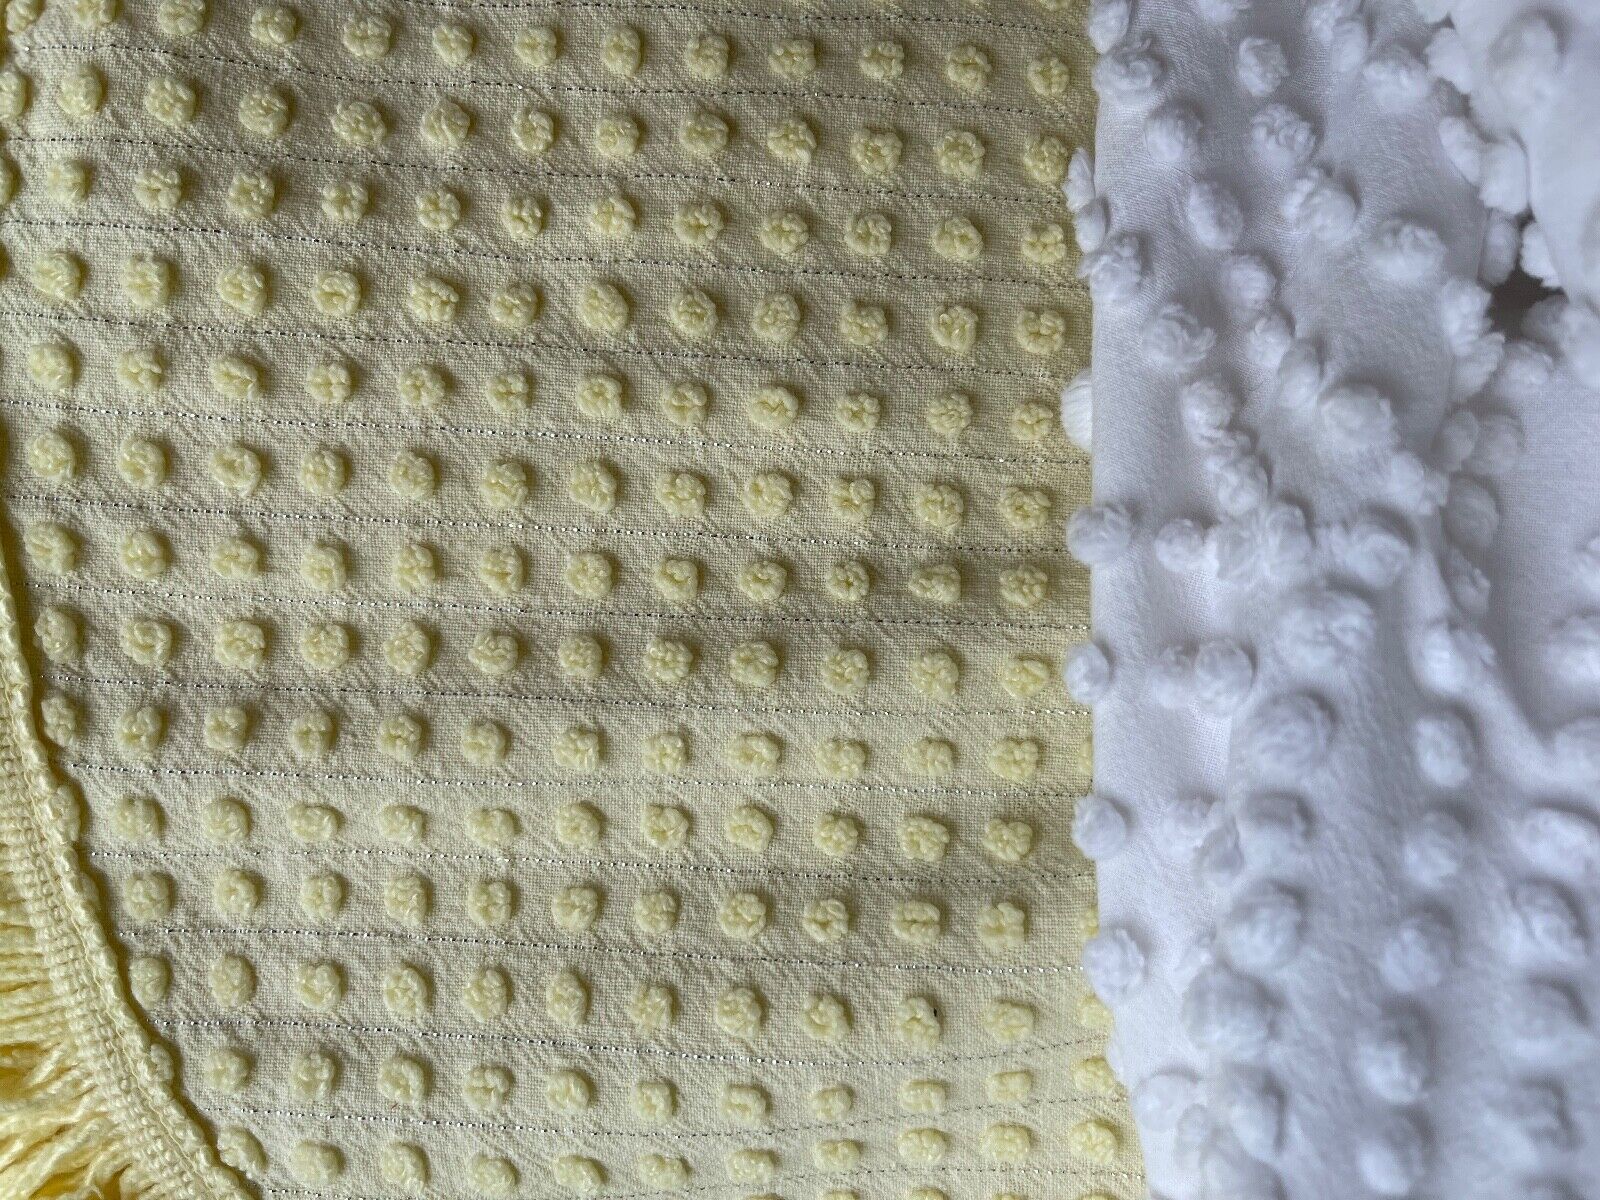 Bright Yellow Morgan Jones popcorn pattern vint chenille bedspread 92 X 1O4 NU